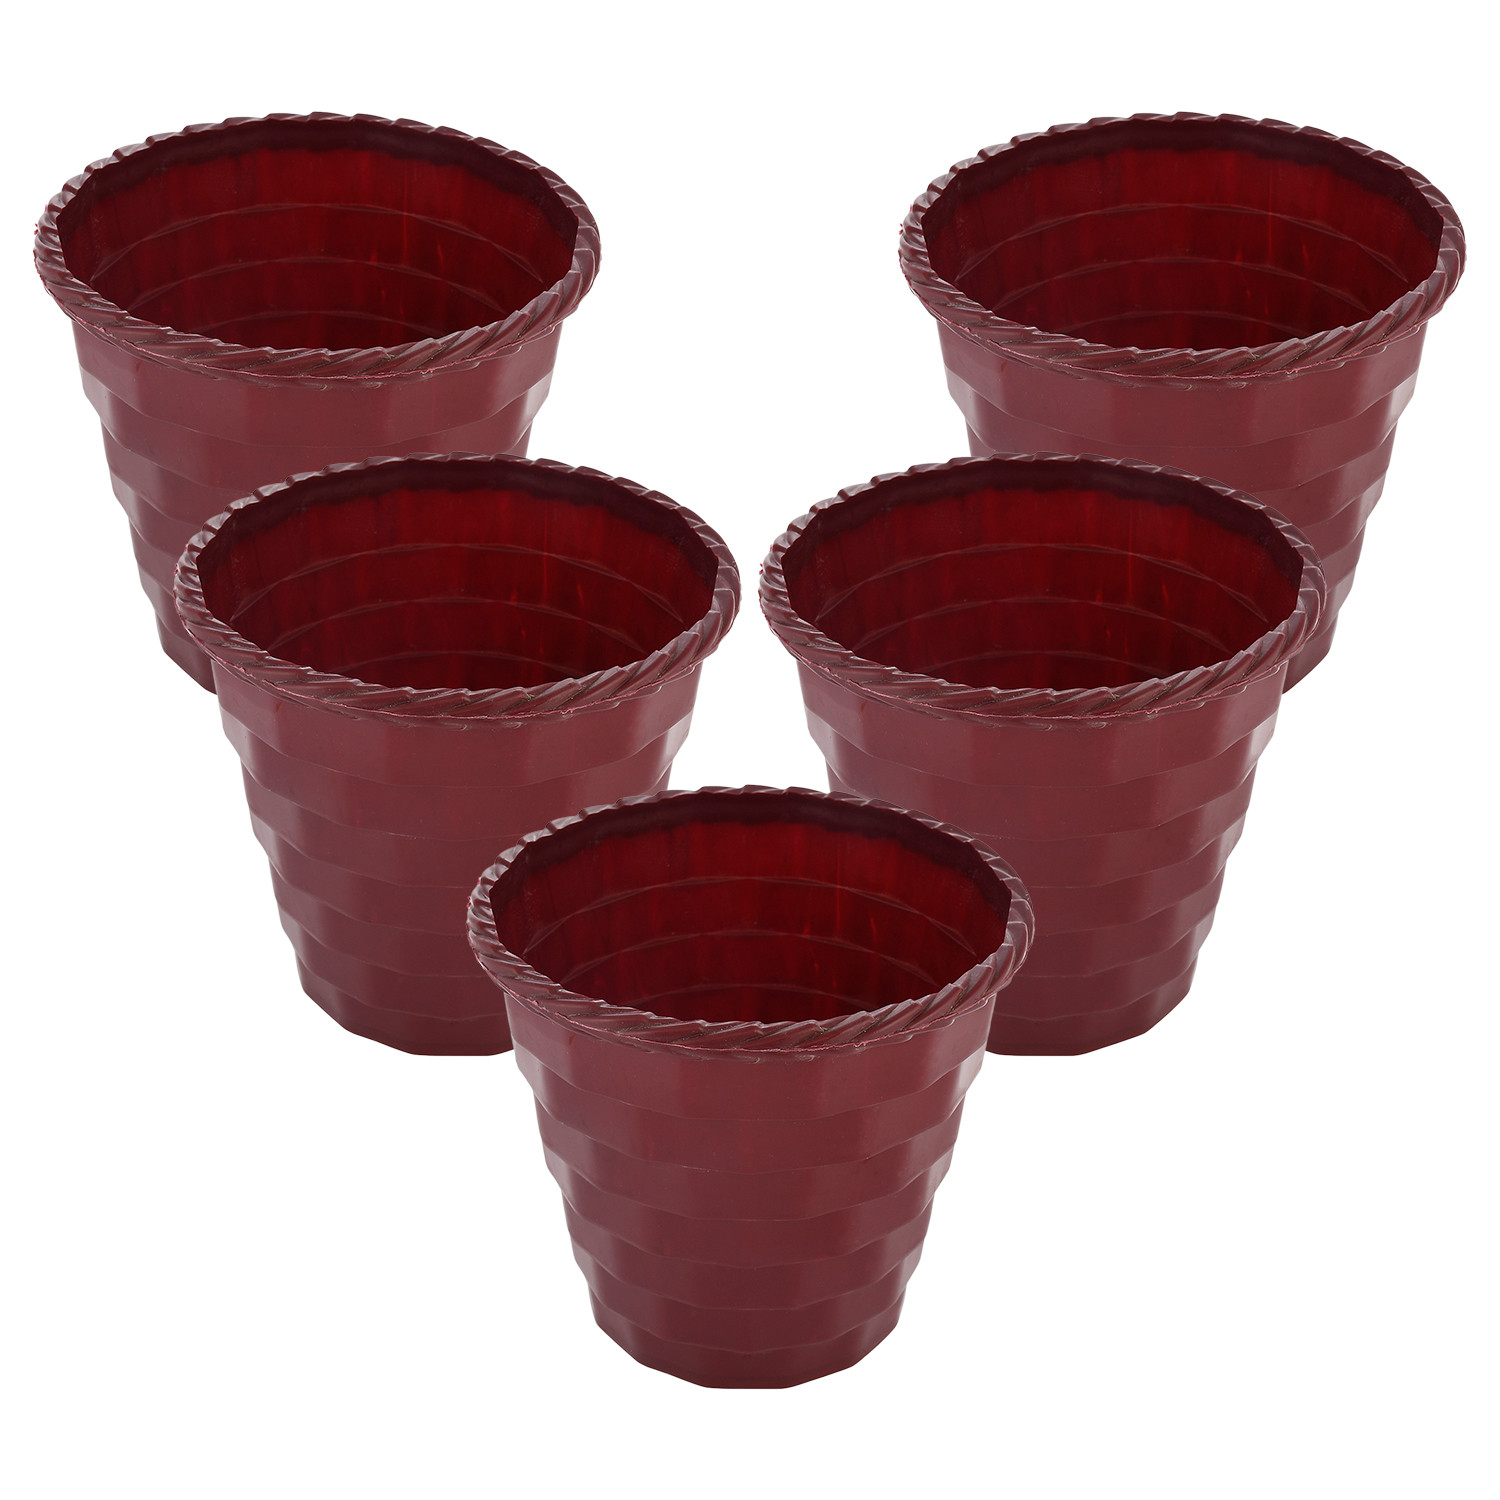 Kuber Industries Brick Flower Pot|Durable Plastic Flower Pots|Planters for Home Décor|Garden|Living Room|Balcony|6 Inch|(Maroon)